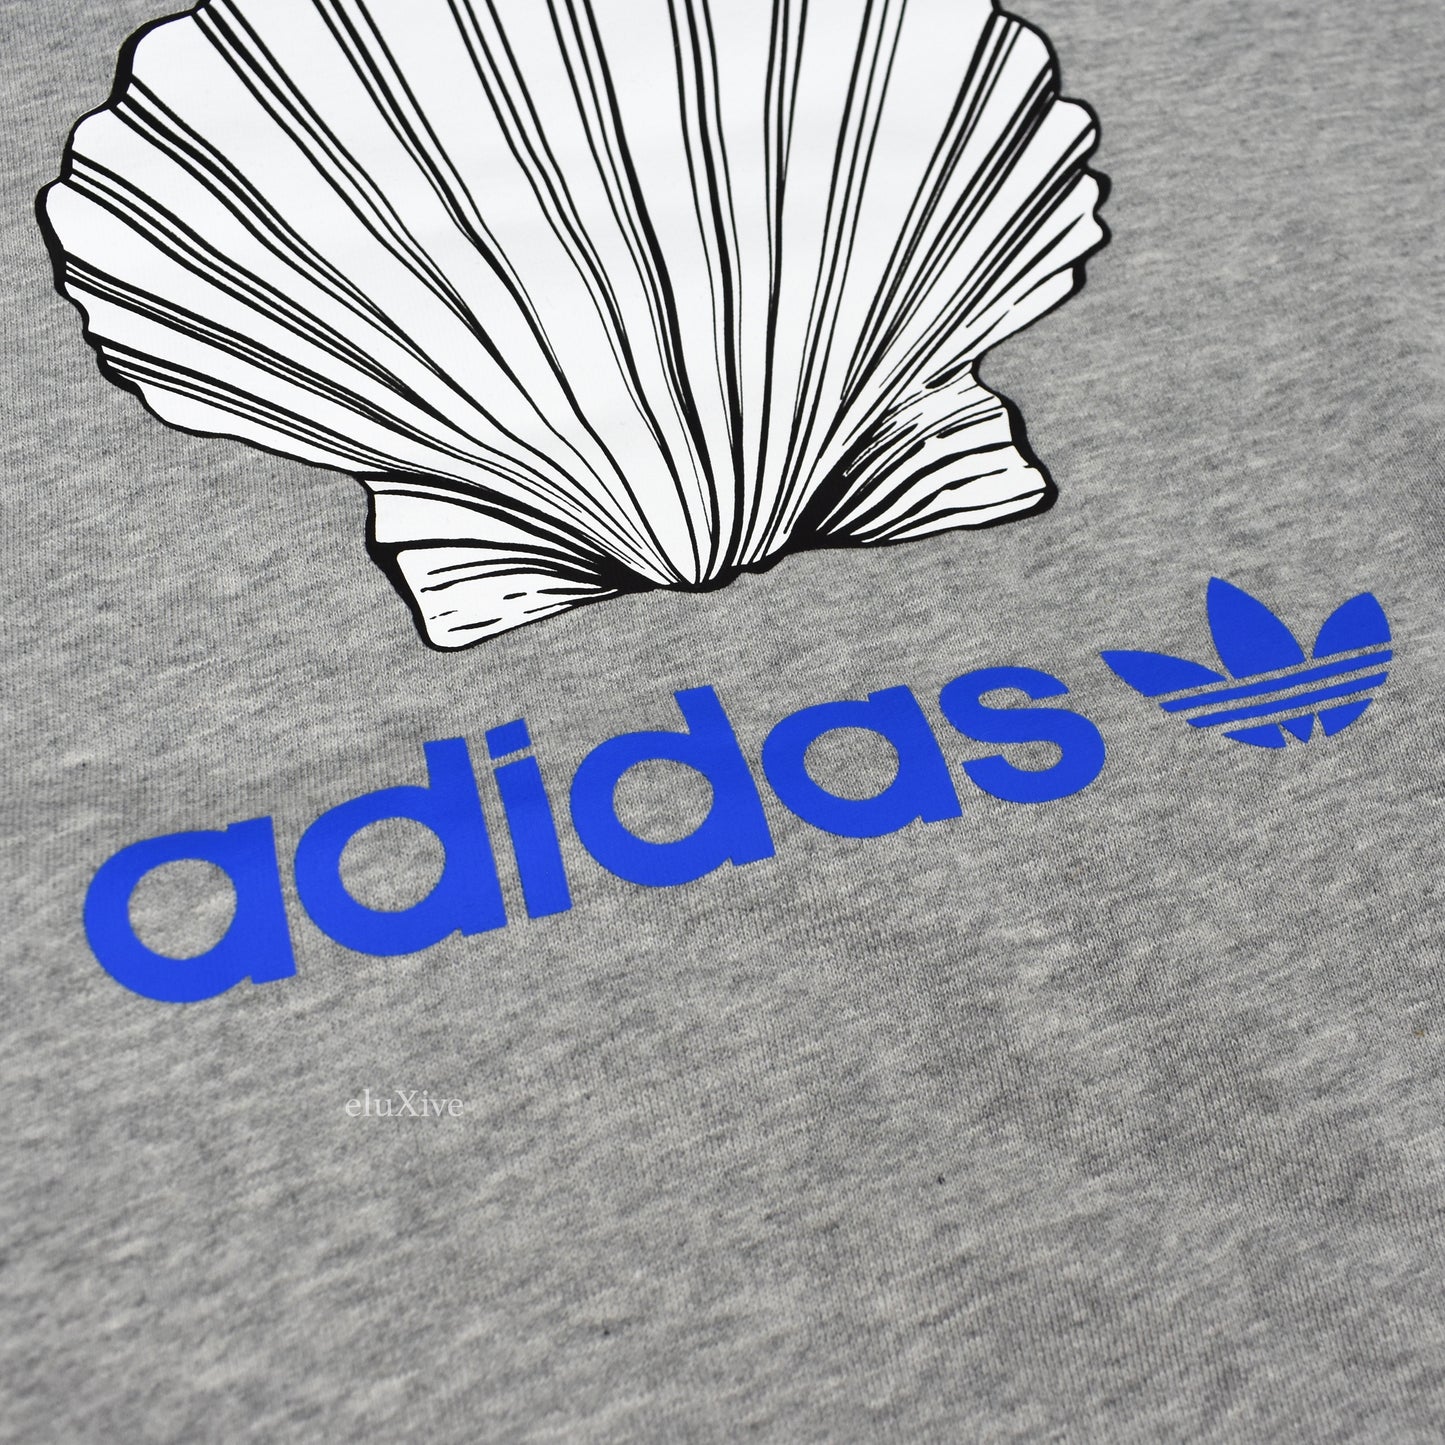 Noah x Adidas - Shell Logo Crewneck Sweatshirt (Gray)